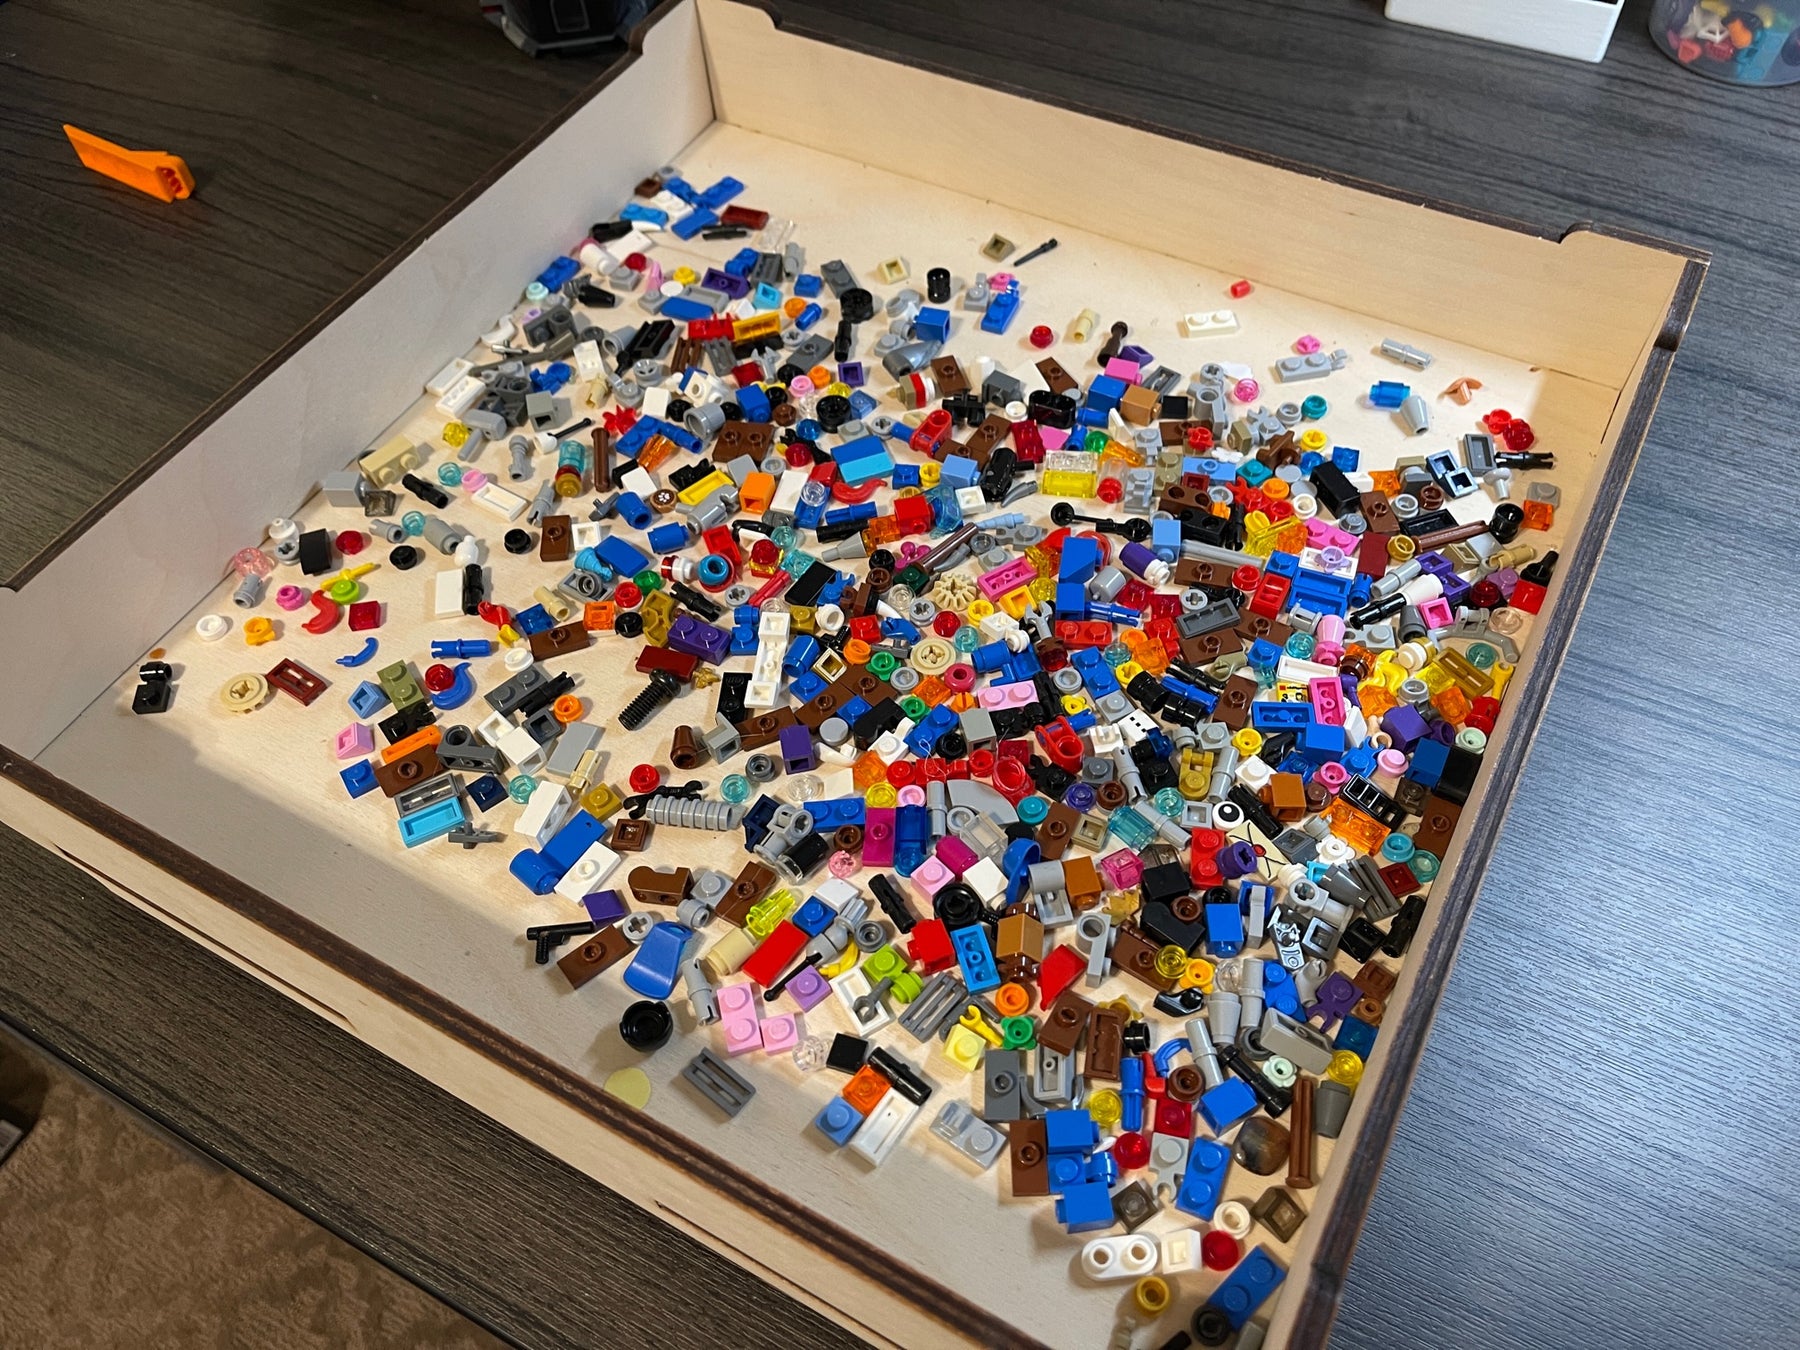 Stackable LEGO Brick Sorter / Sorting Box by Casadebricks.com